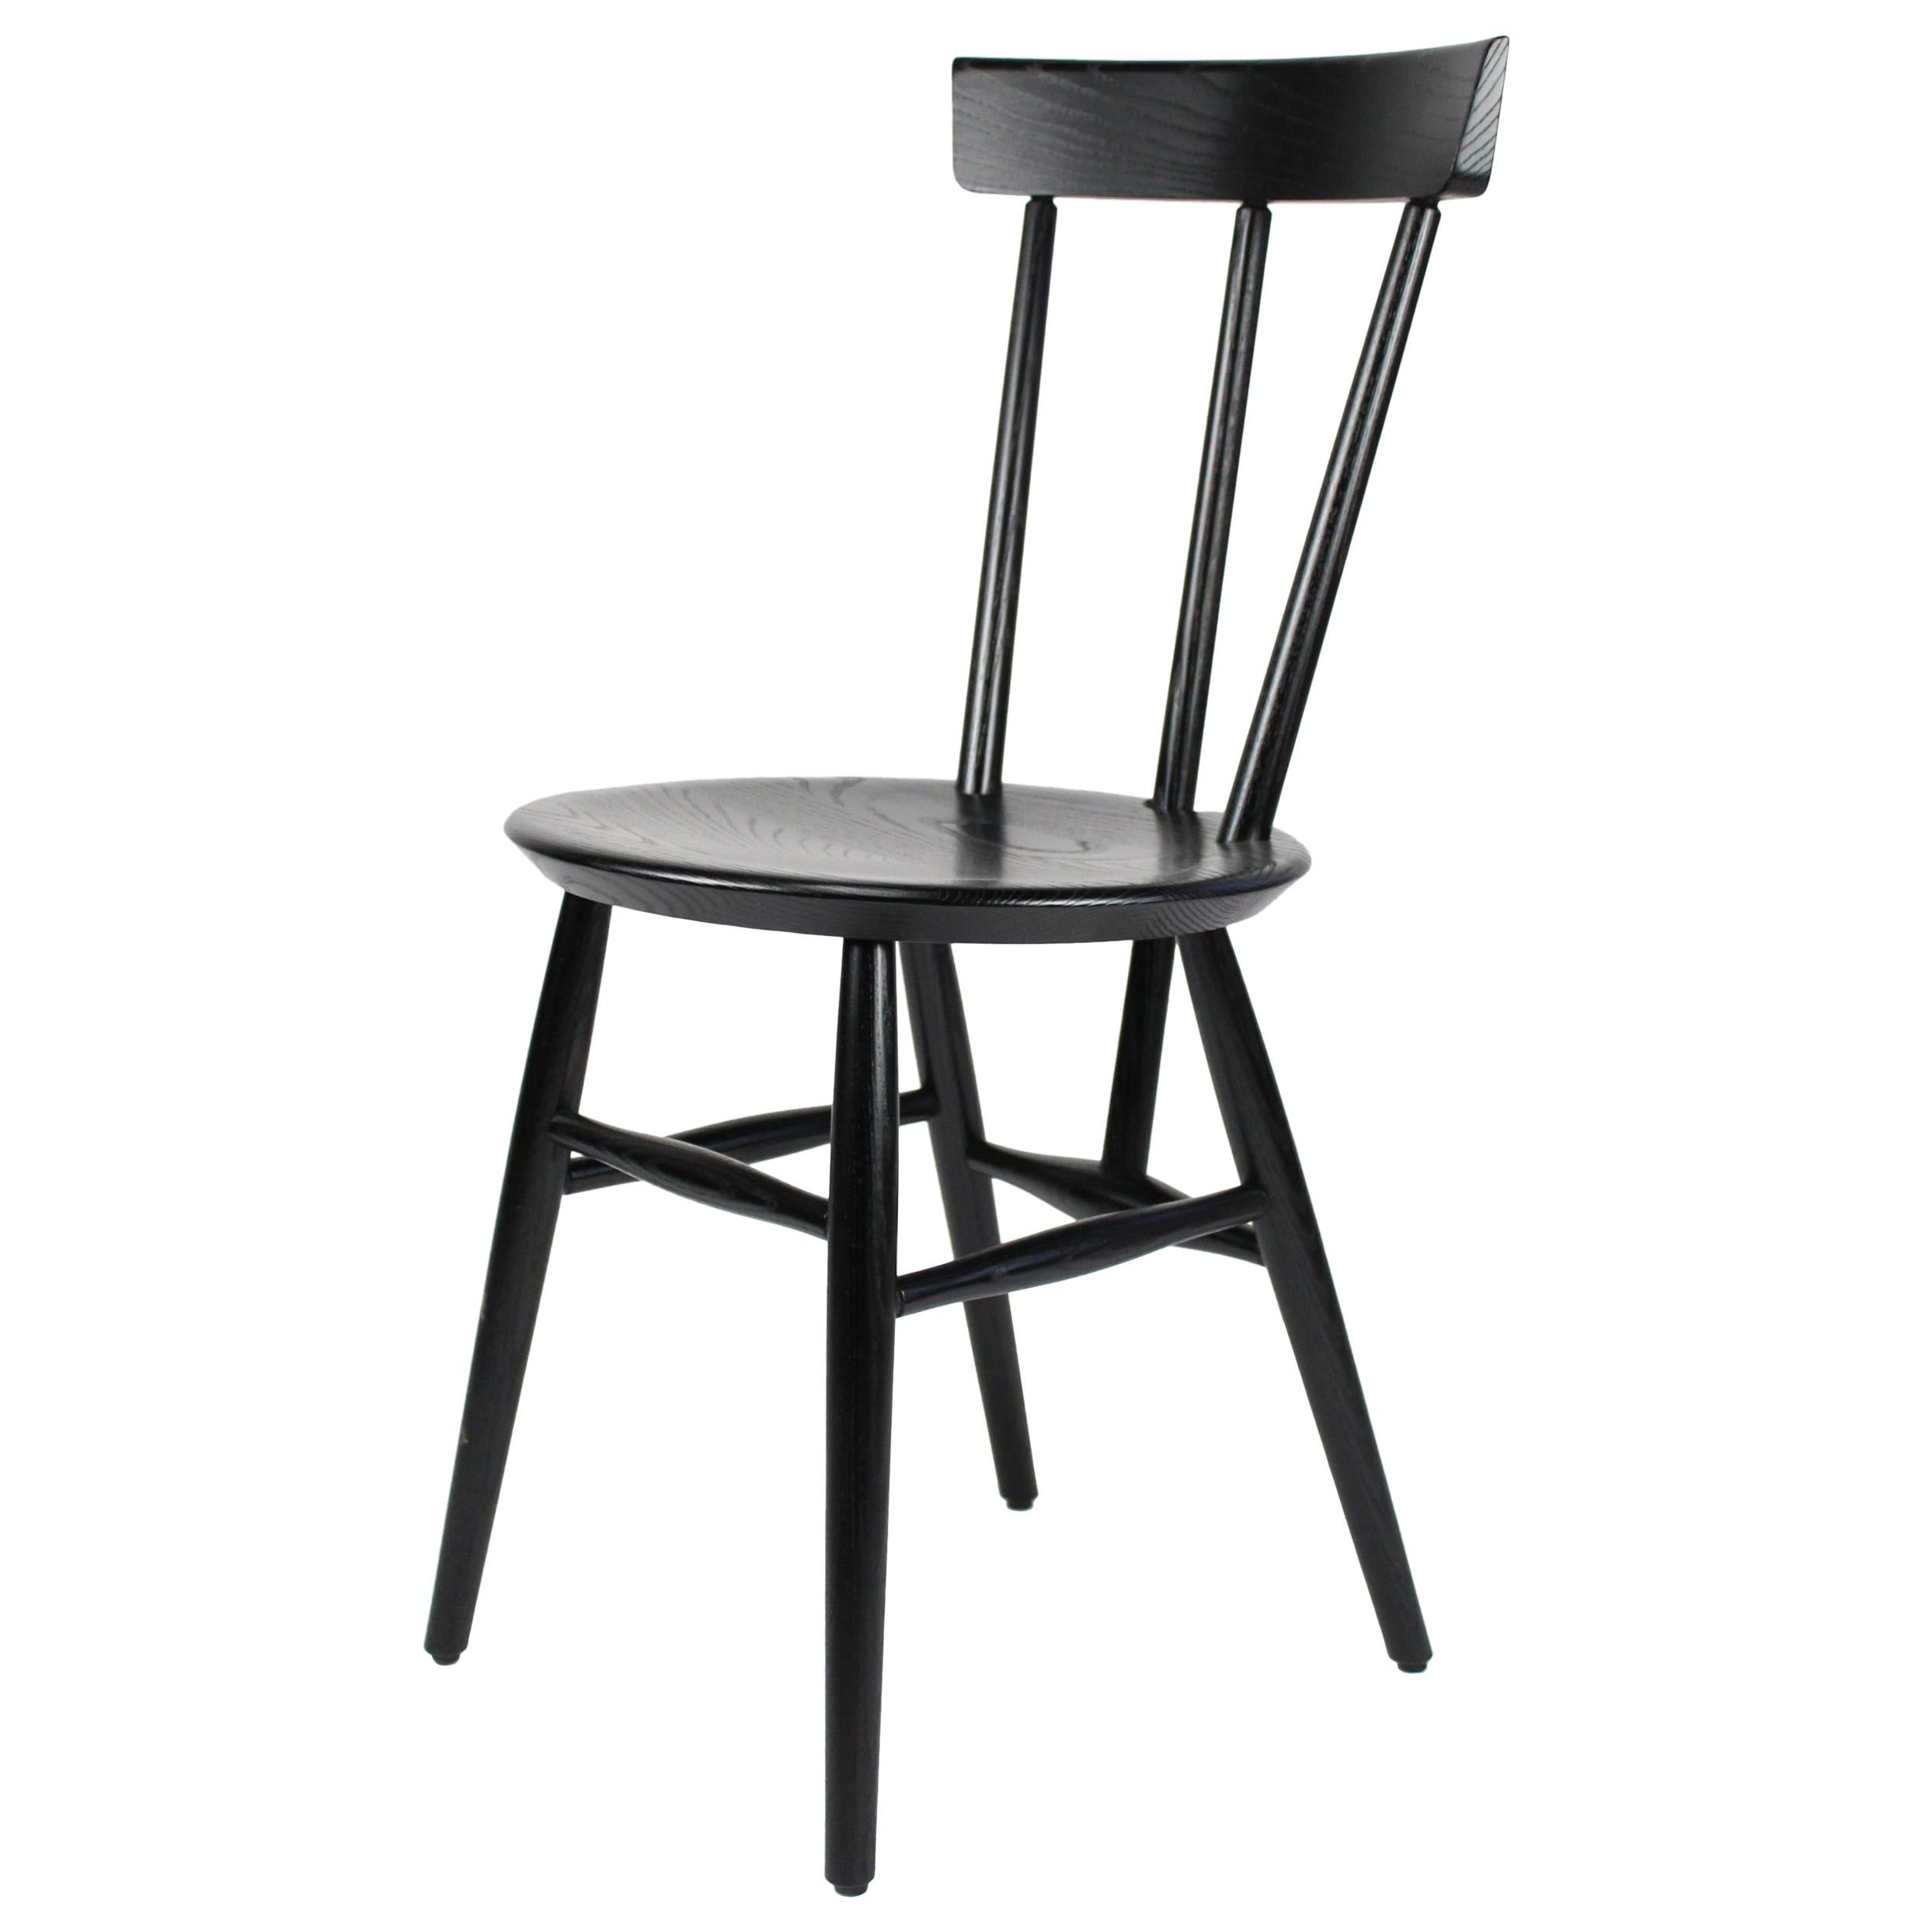 Sakonnet Café Side Chair, Contemporary Windsor Chair For Sale